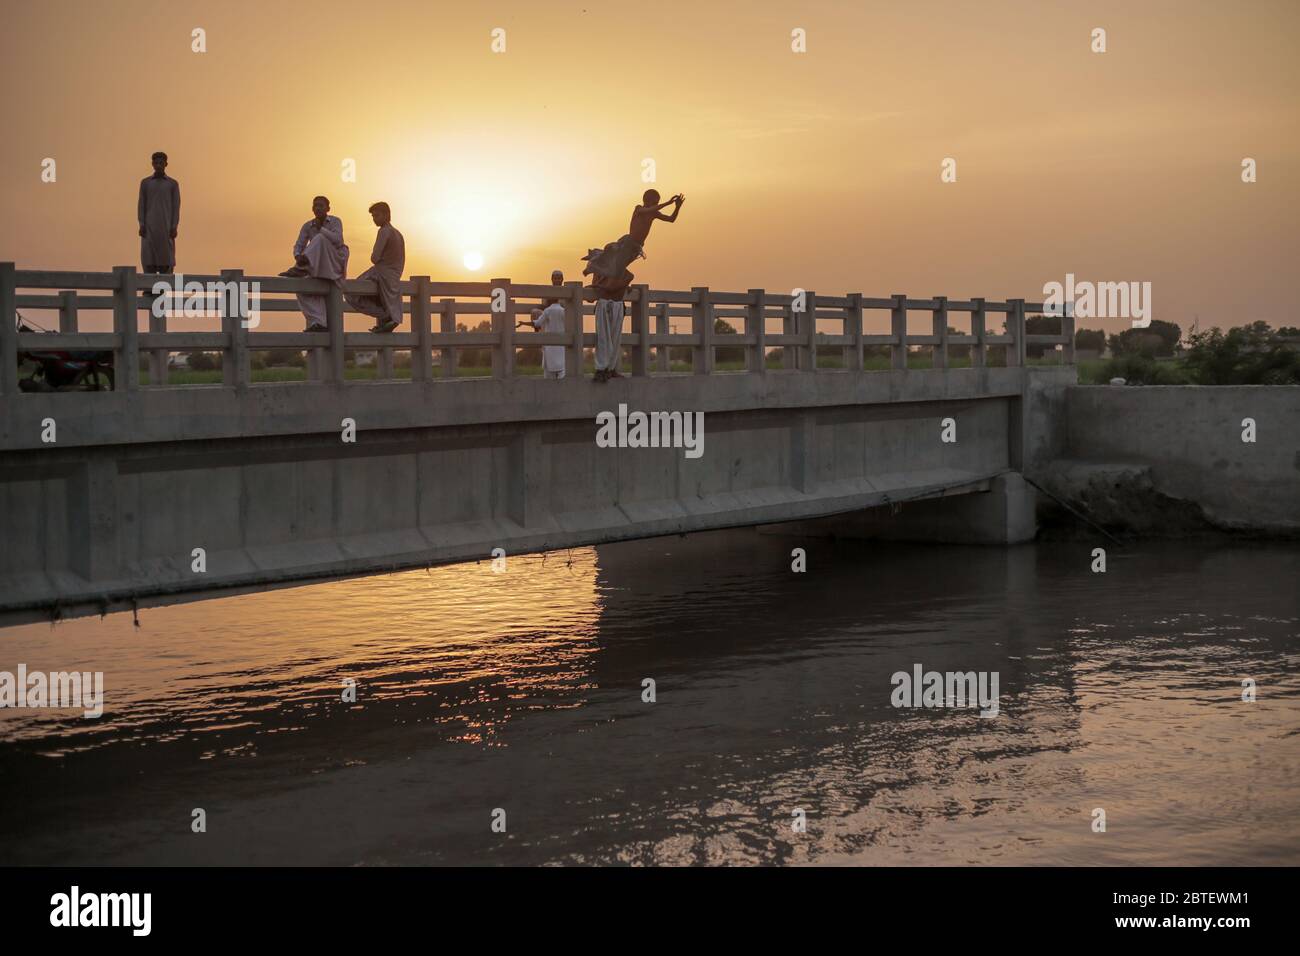 Kids Sitting Water From A Bridge During Sunset, In Moro, Sindh, Pakistan 26/08/2017 Stock Photo